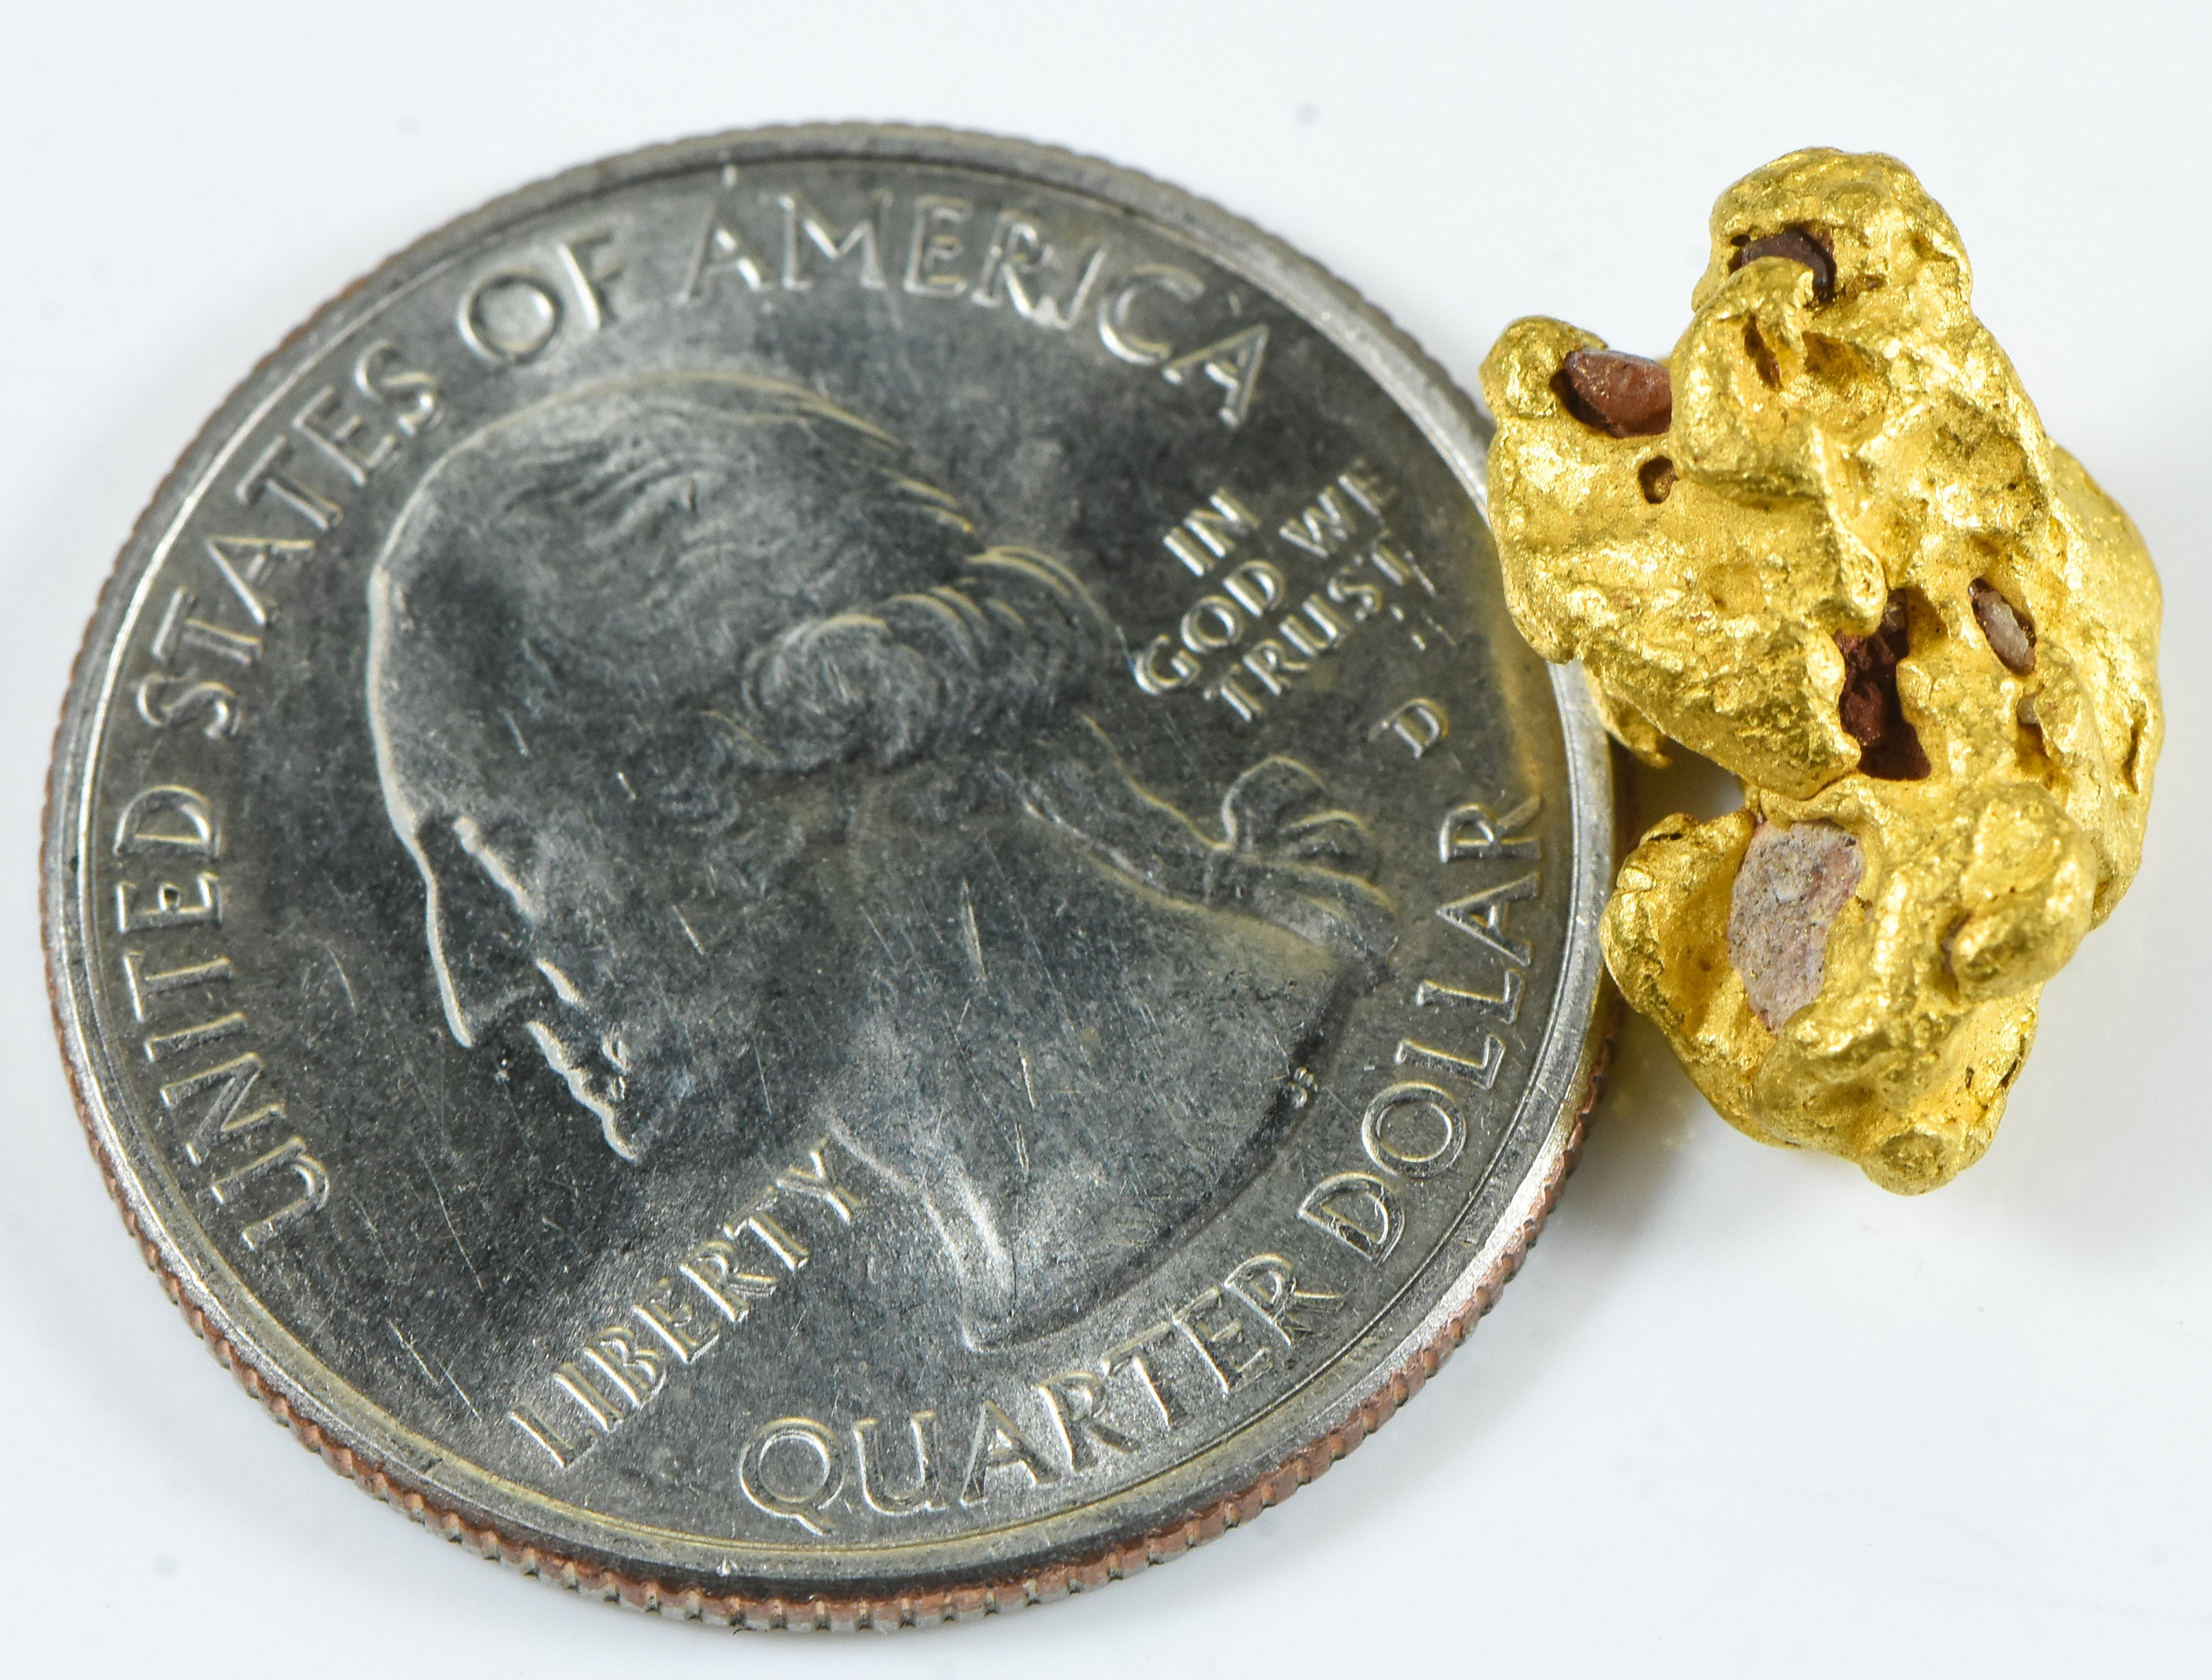 #1086 Natural Gold Nugget Australian 5.70 Grams Genuine